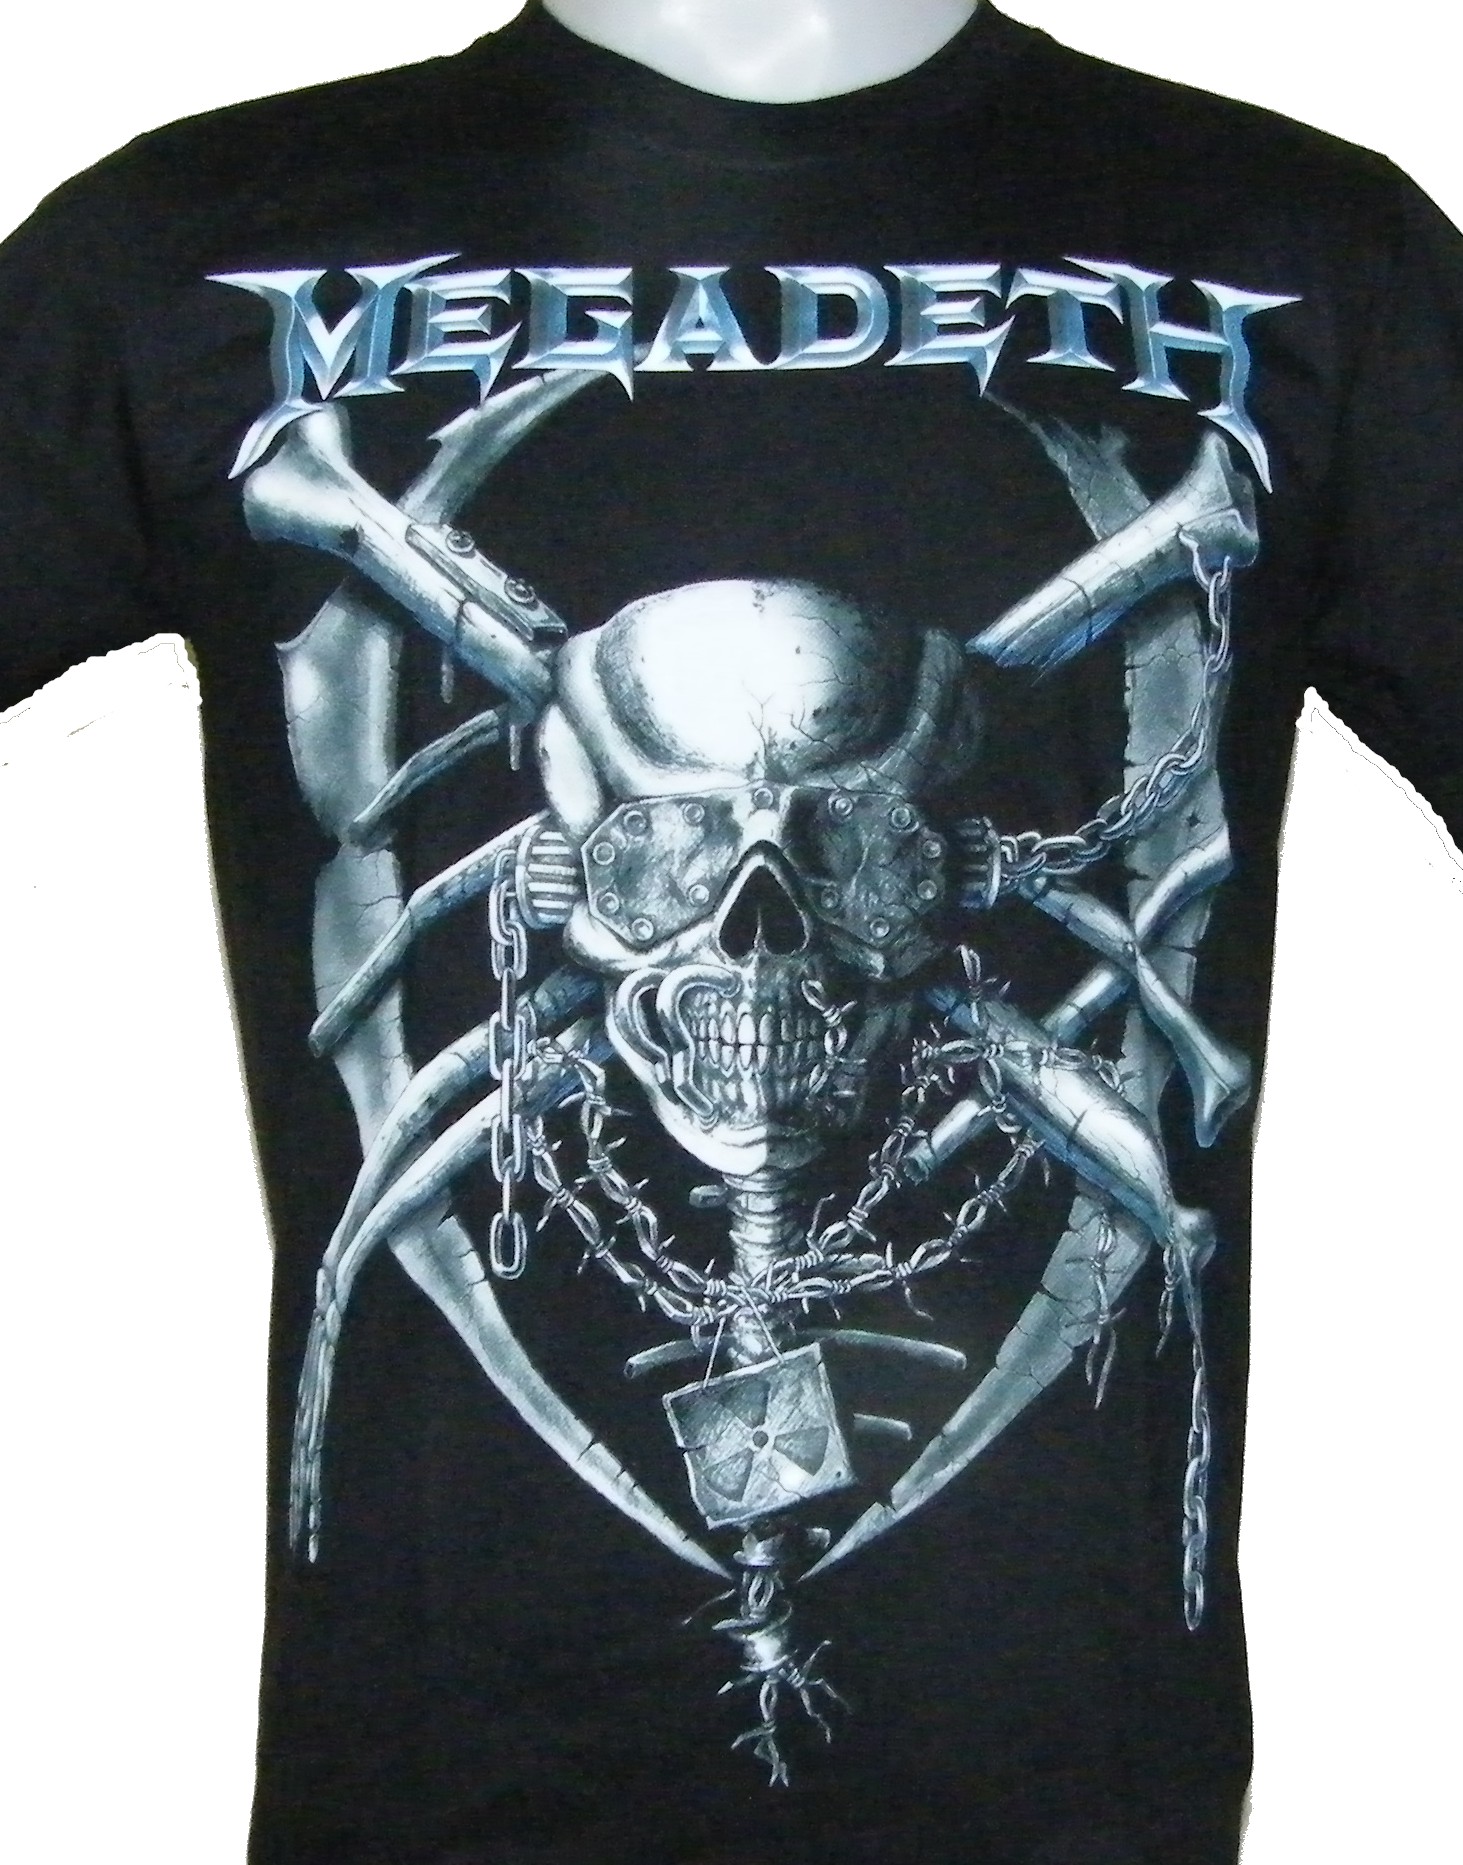 Megadeth t-shirt size M